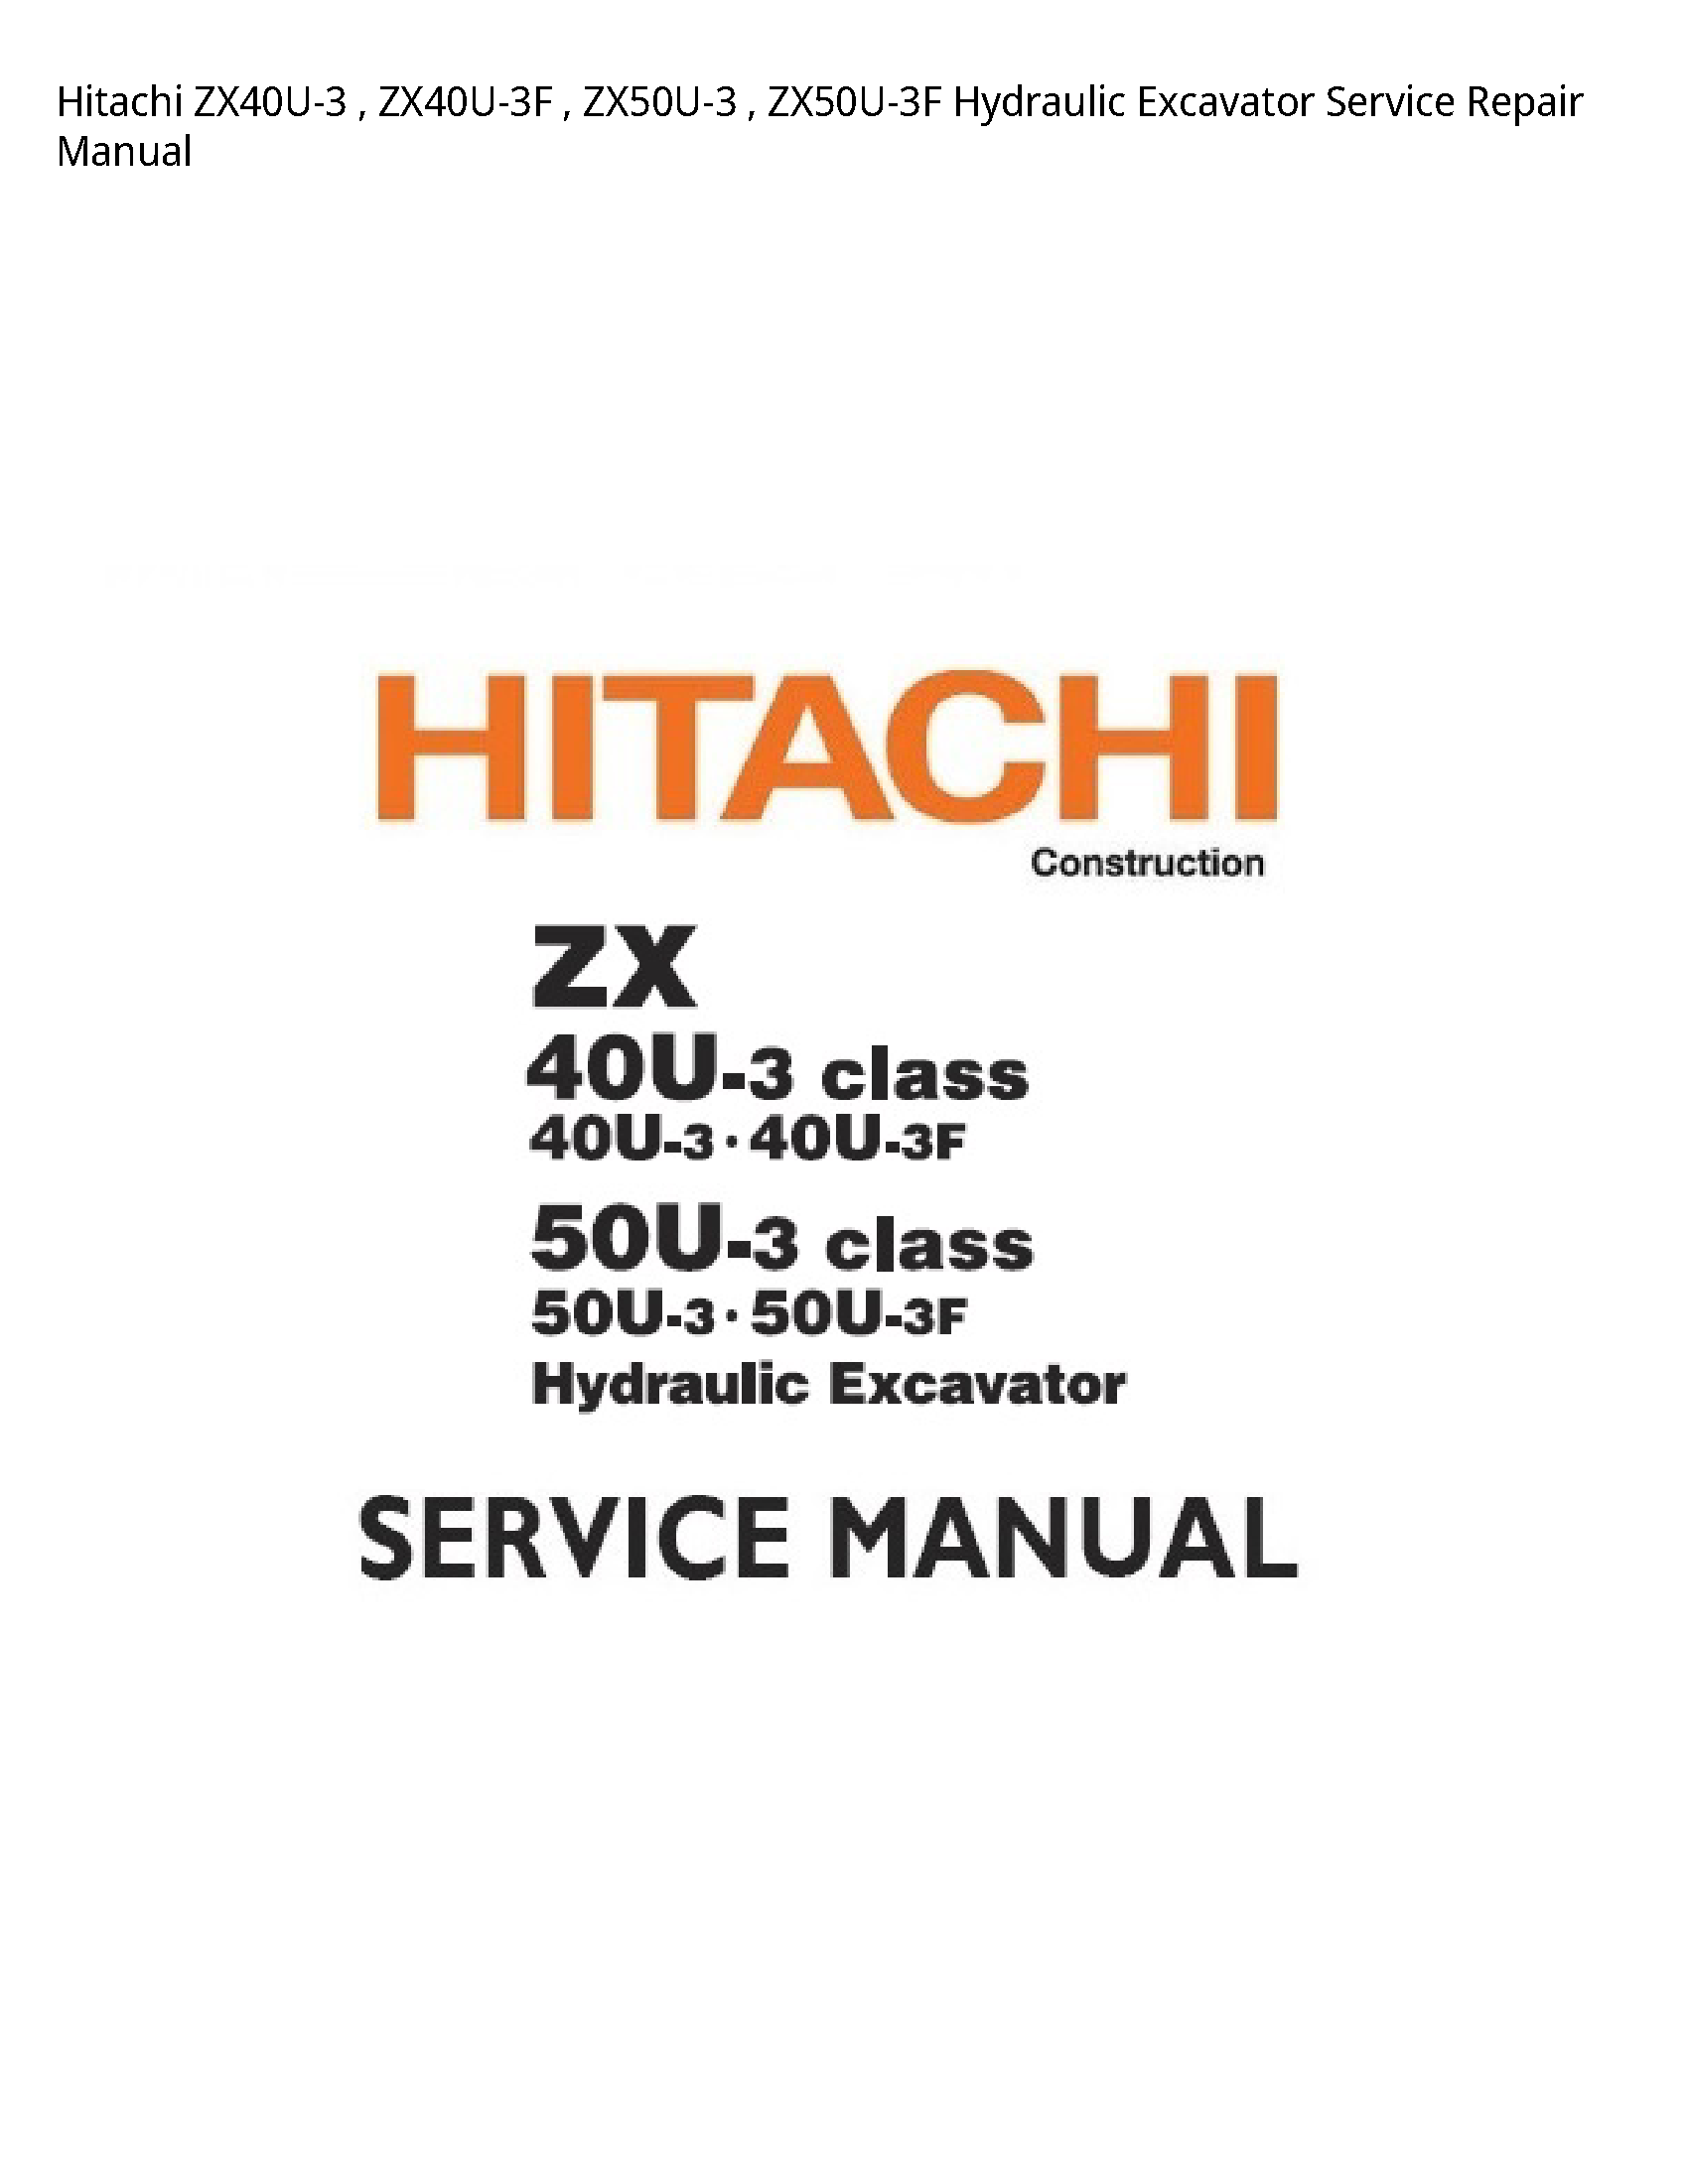 Hitachi ZX40U-3 Hydraulic Excavator manual